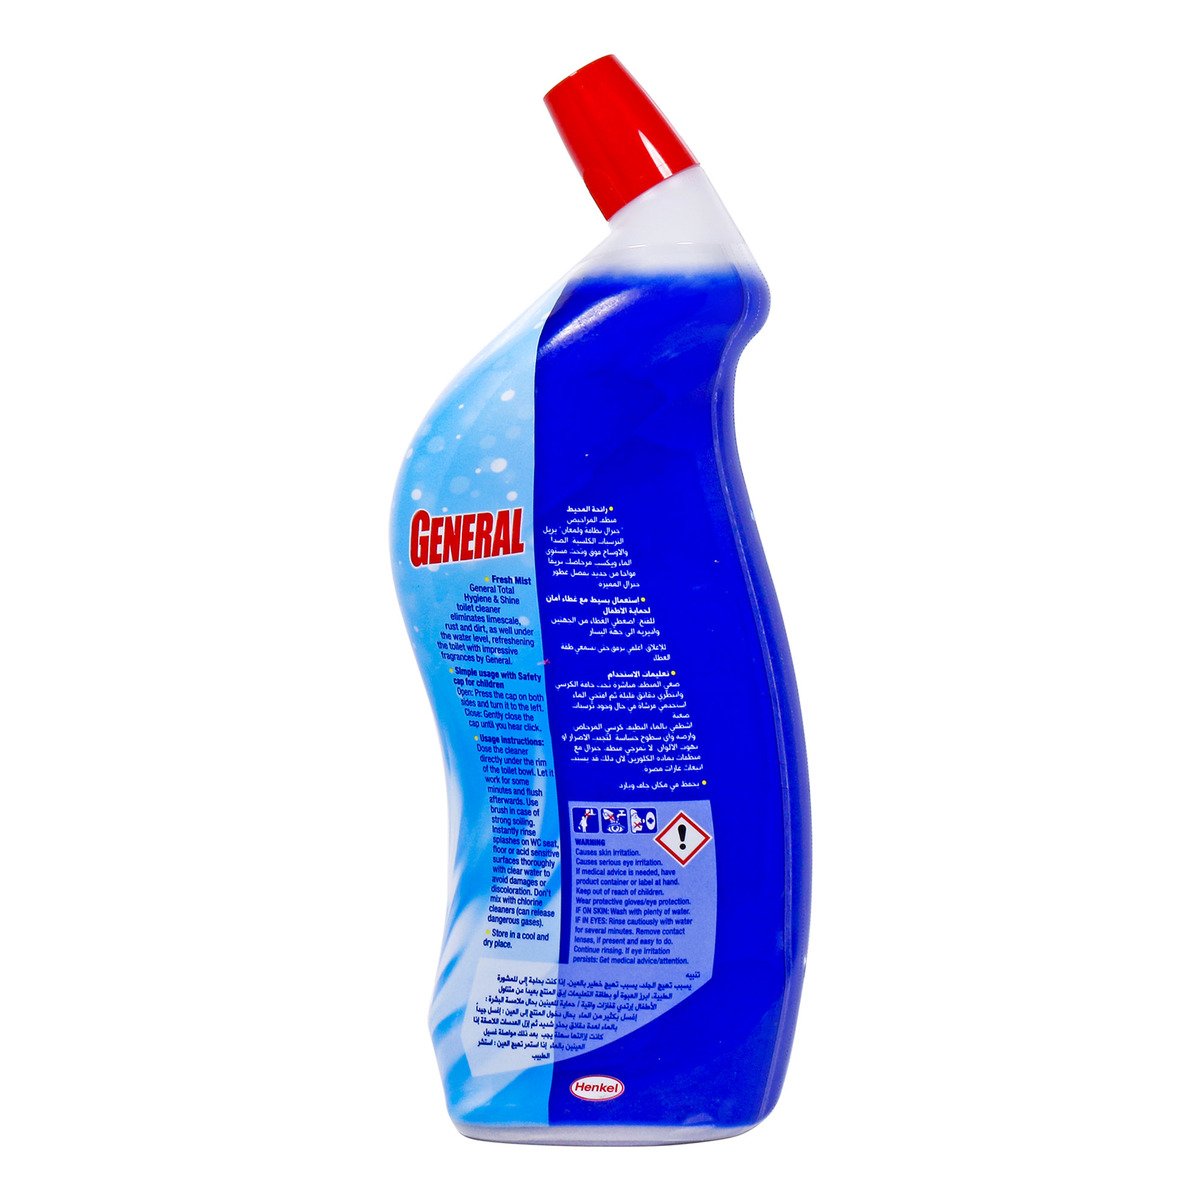 Henkel General Liquid Toilet Cleaner Fresh Mist 750ml